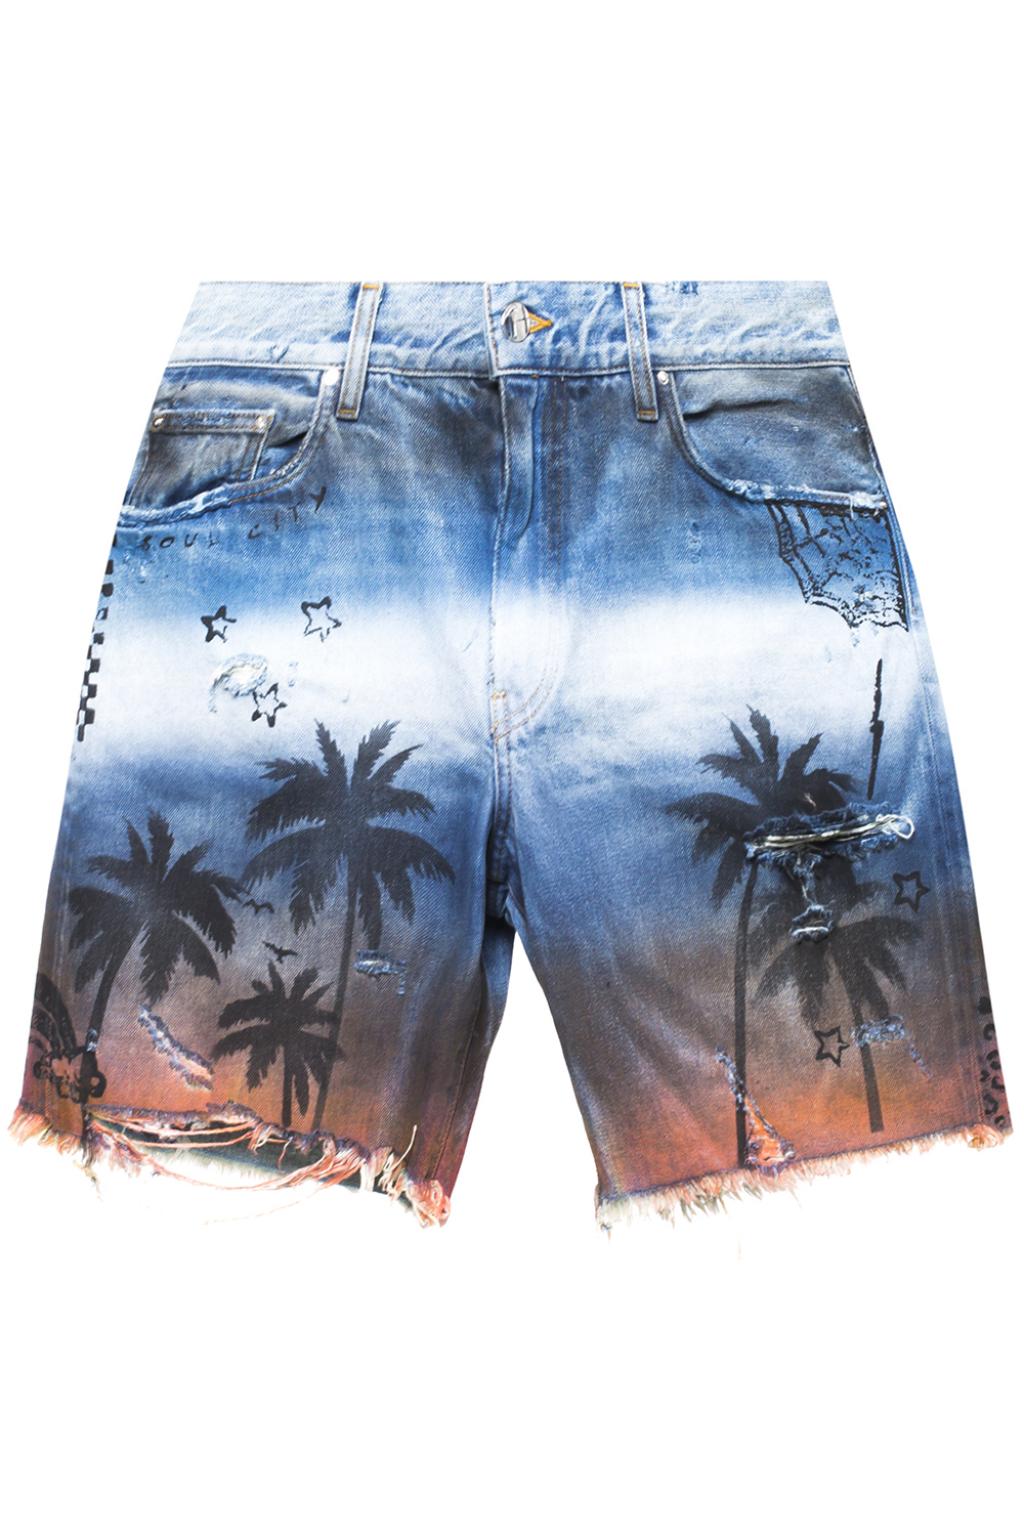 amiri palm jeans